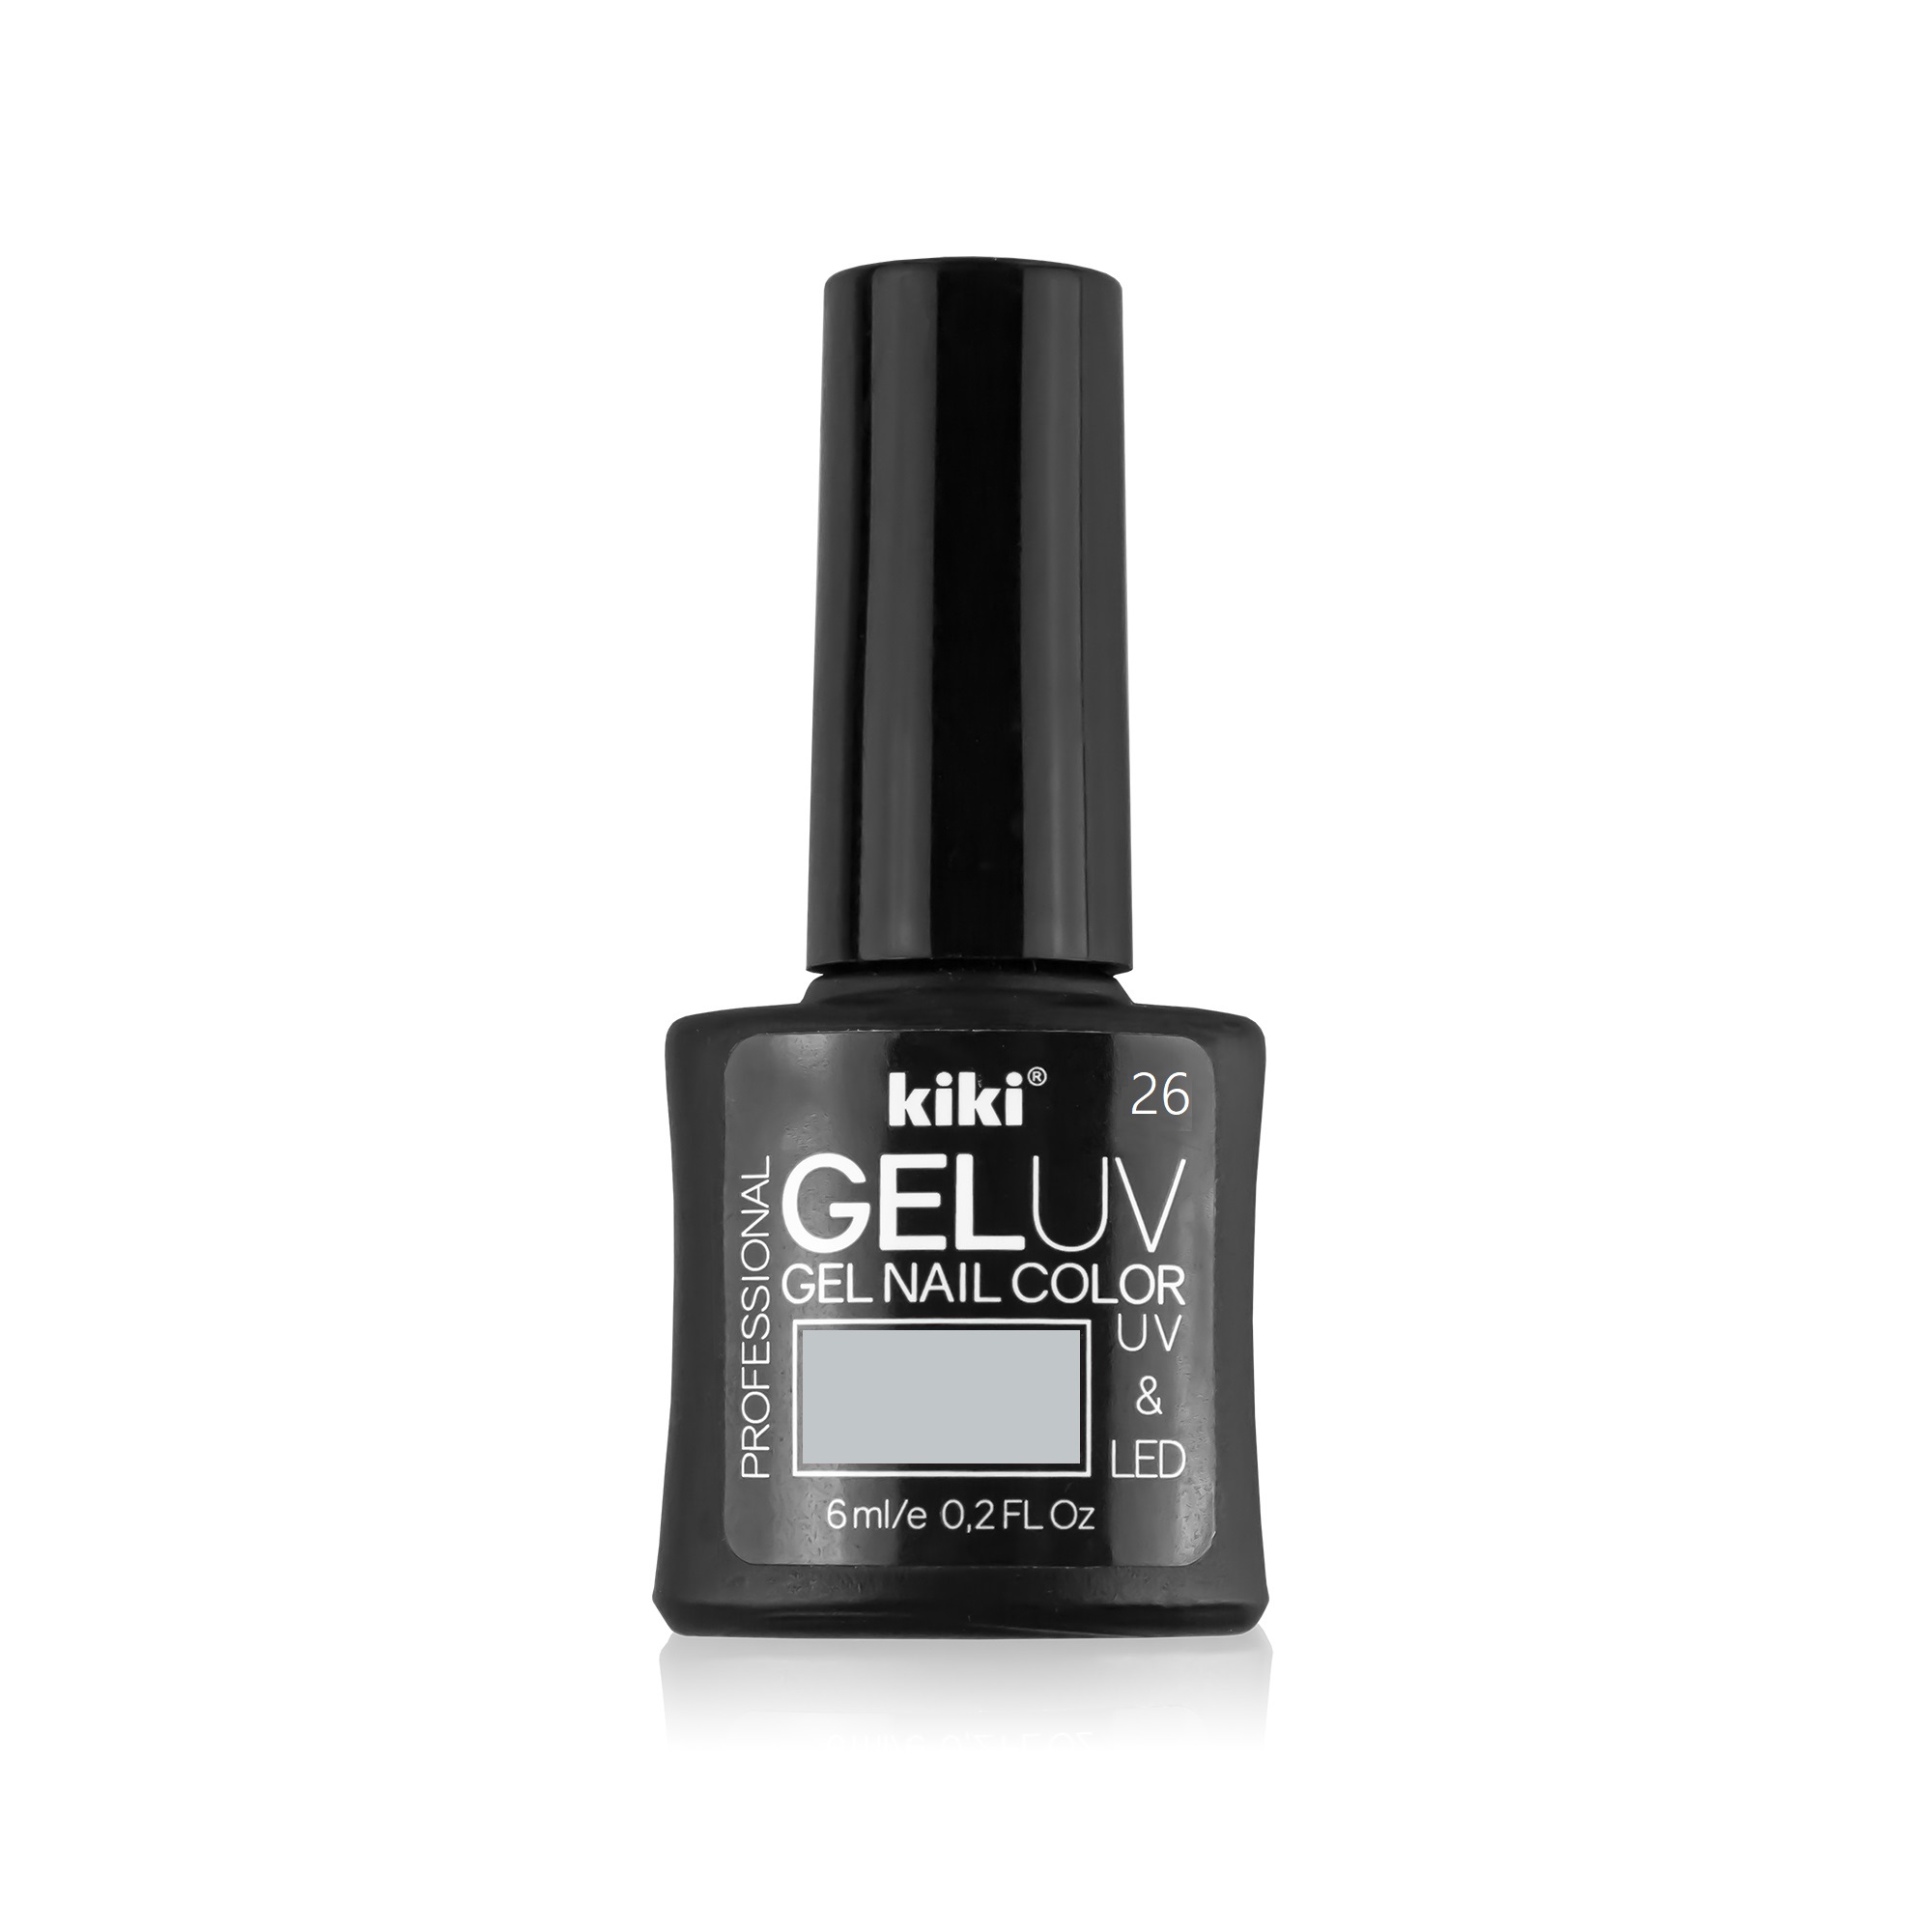 Гель-лак для ногтей Kiki Gel Uv&Led 26 светло-серый kiki нюдовая камуфлирующая база для ногтей gel uv